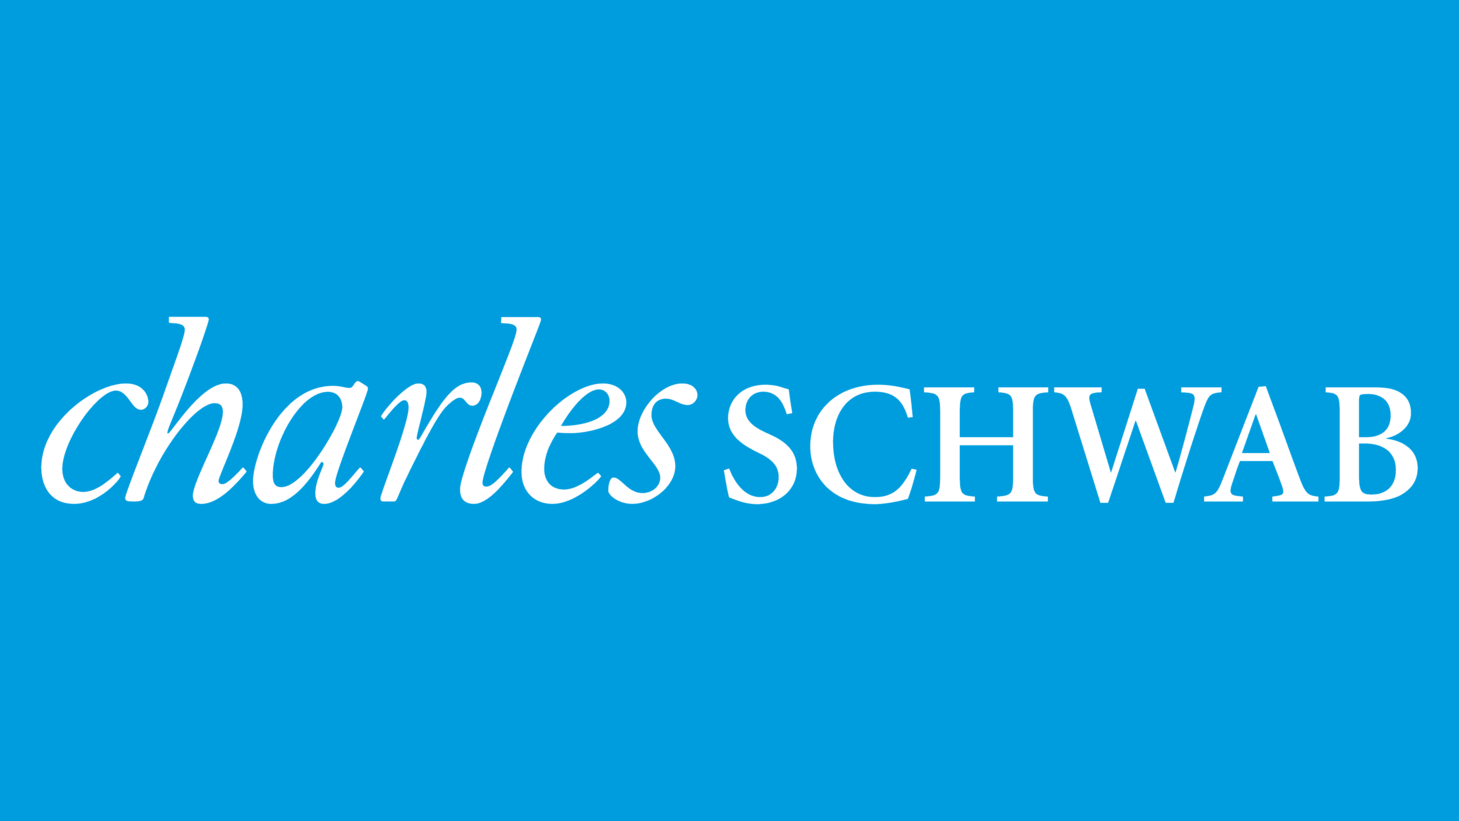 Charles schwab symbol